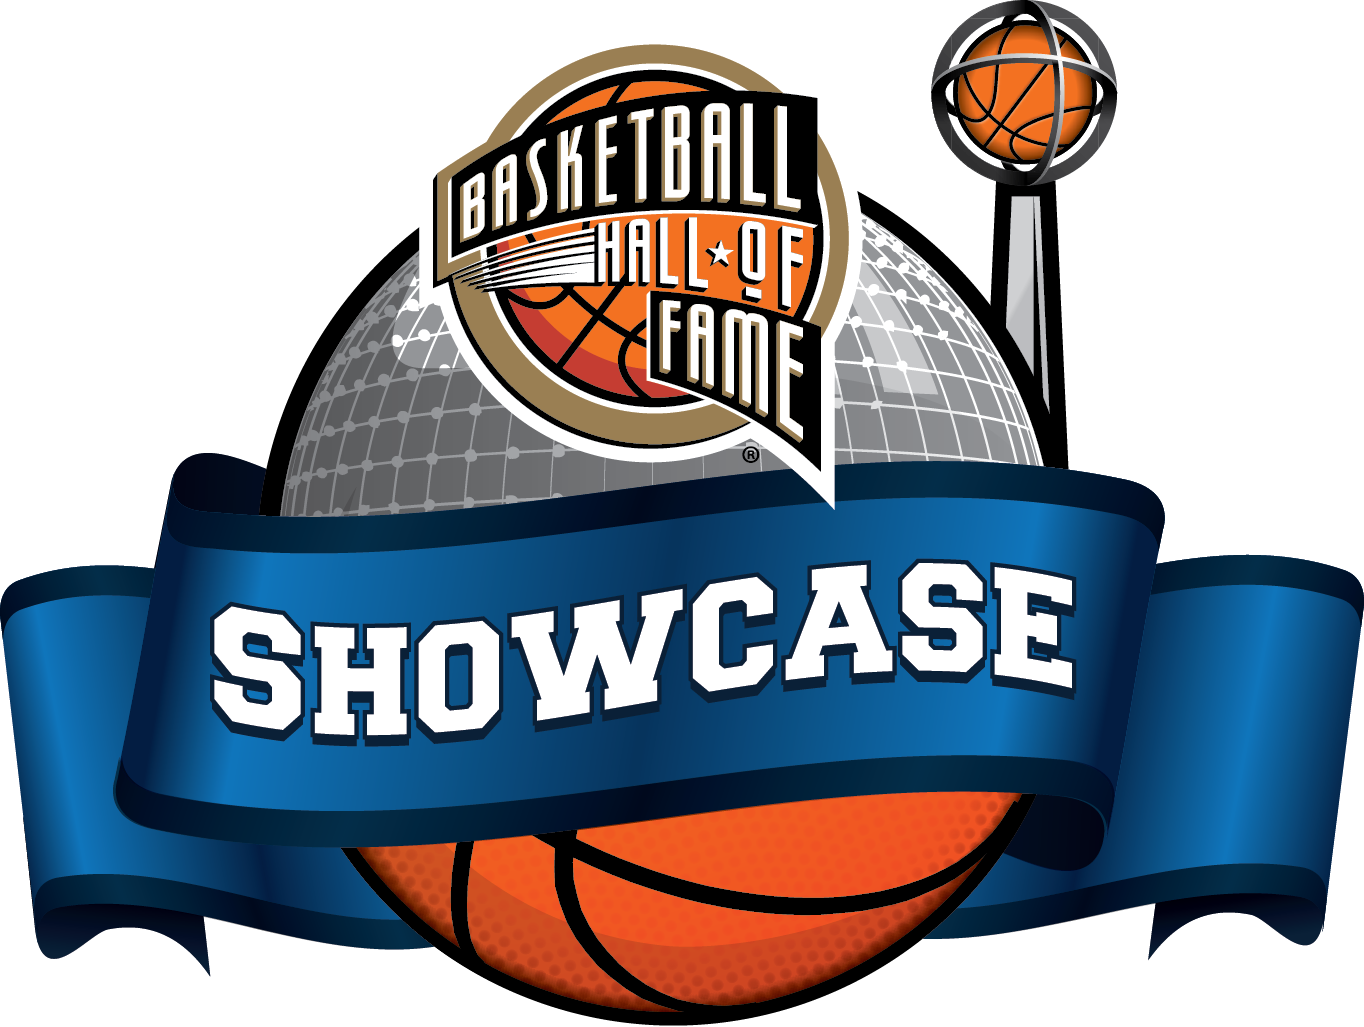 Basketball Hall of Fame Showcase Logo